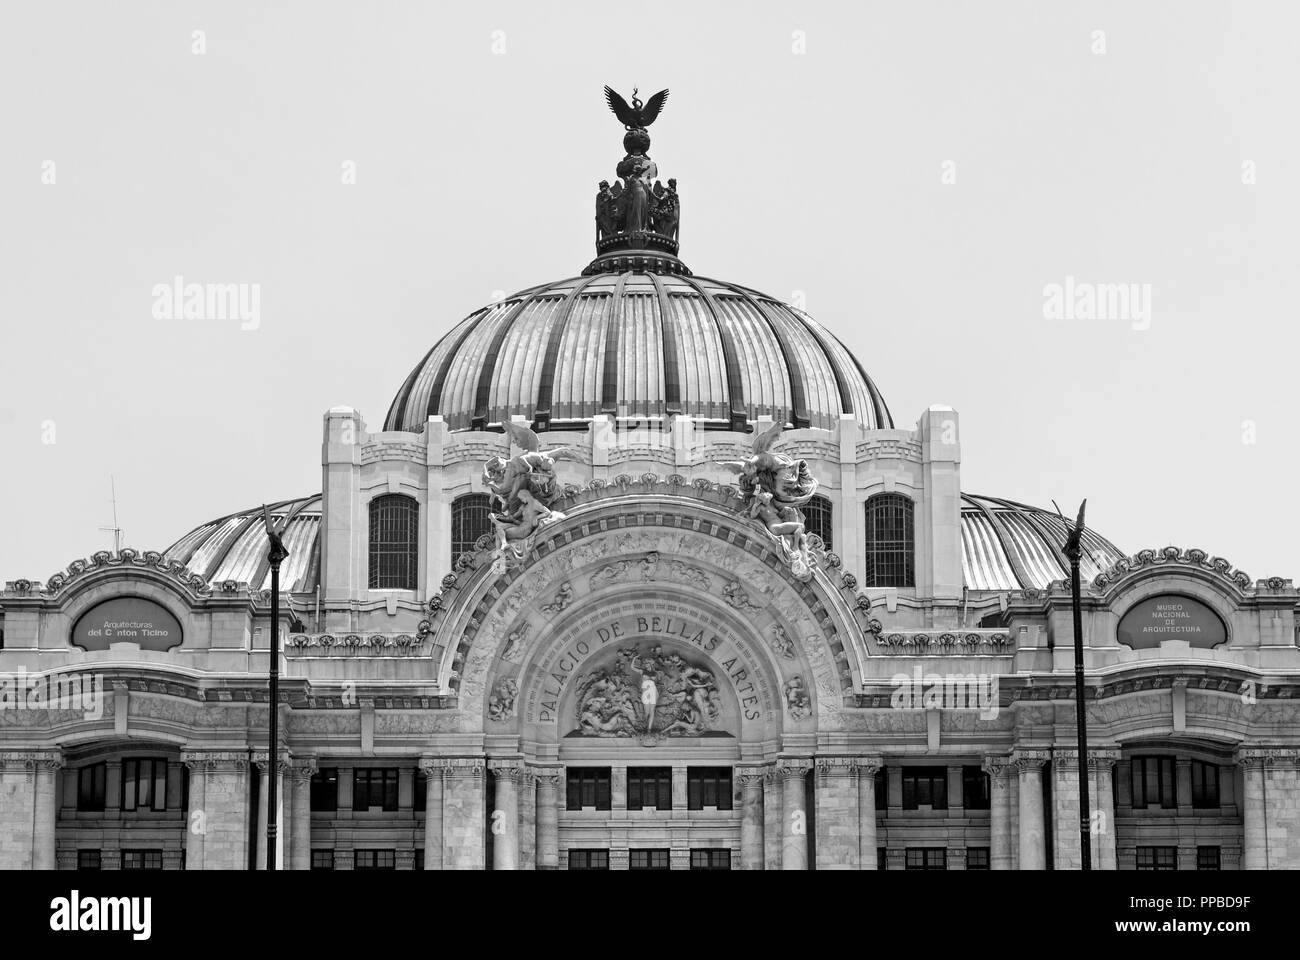 Close-up of the Art Nouveau facade and dome of the Palacio de Bellas Artes or Palace of Fine Arts  in downtown Mexico City, Mexico Stock Photo